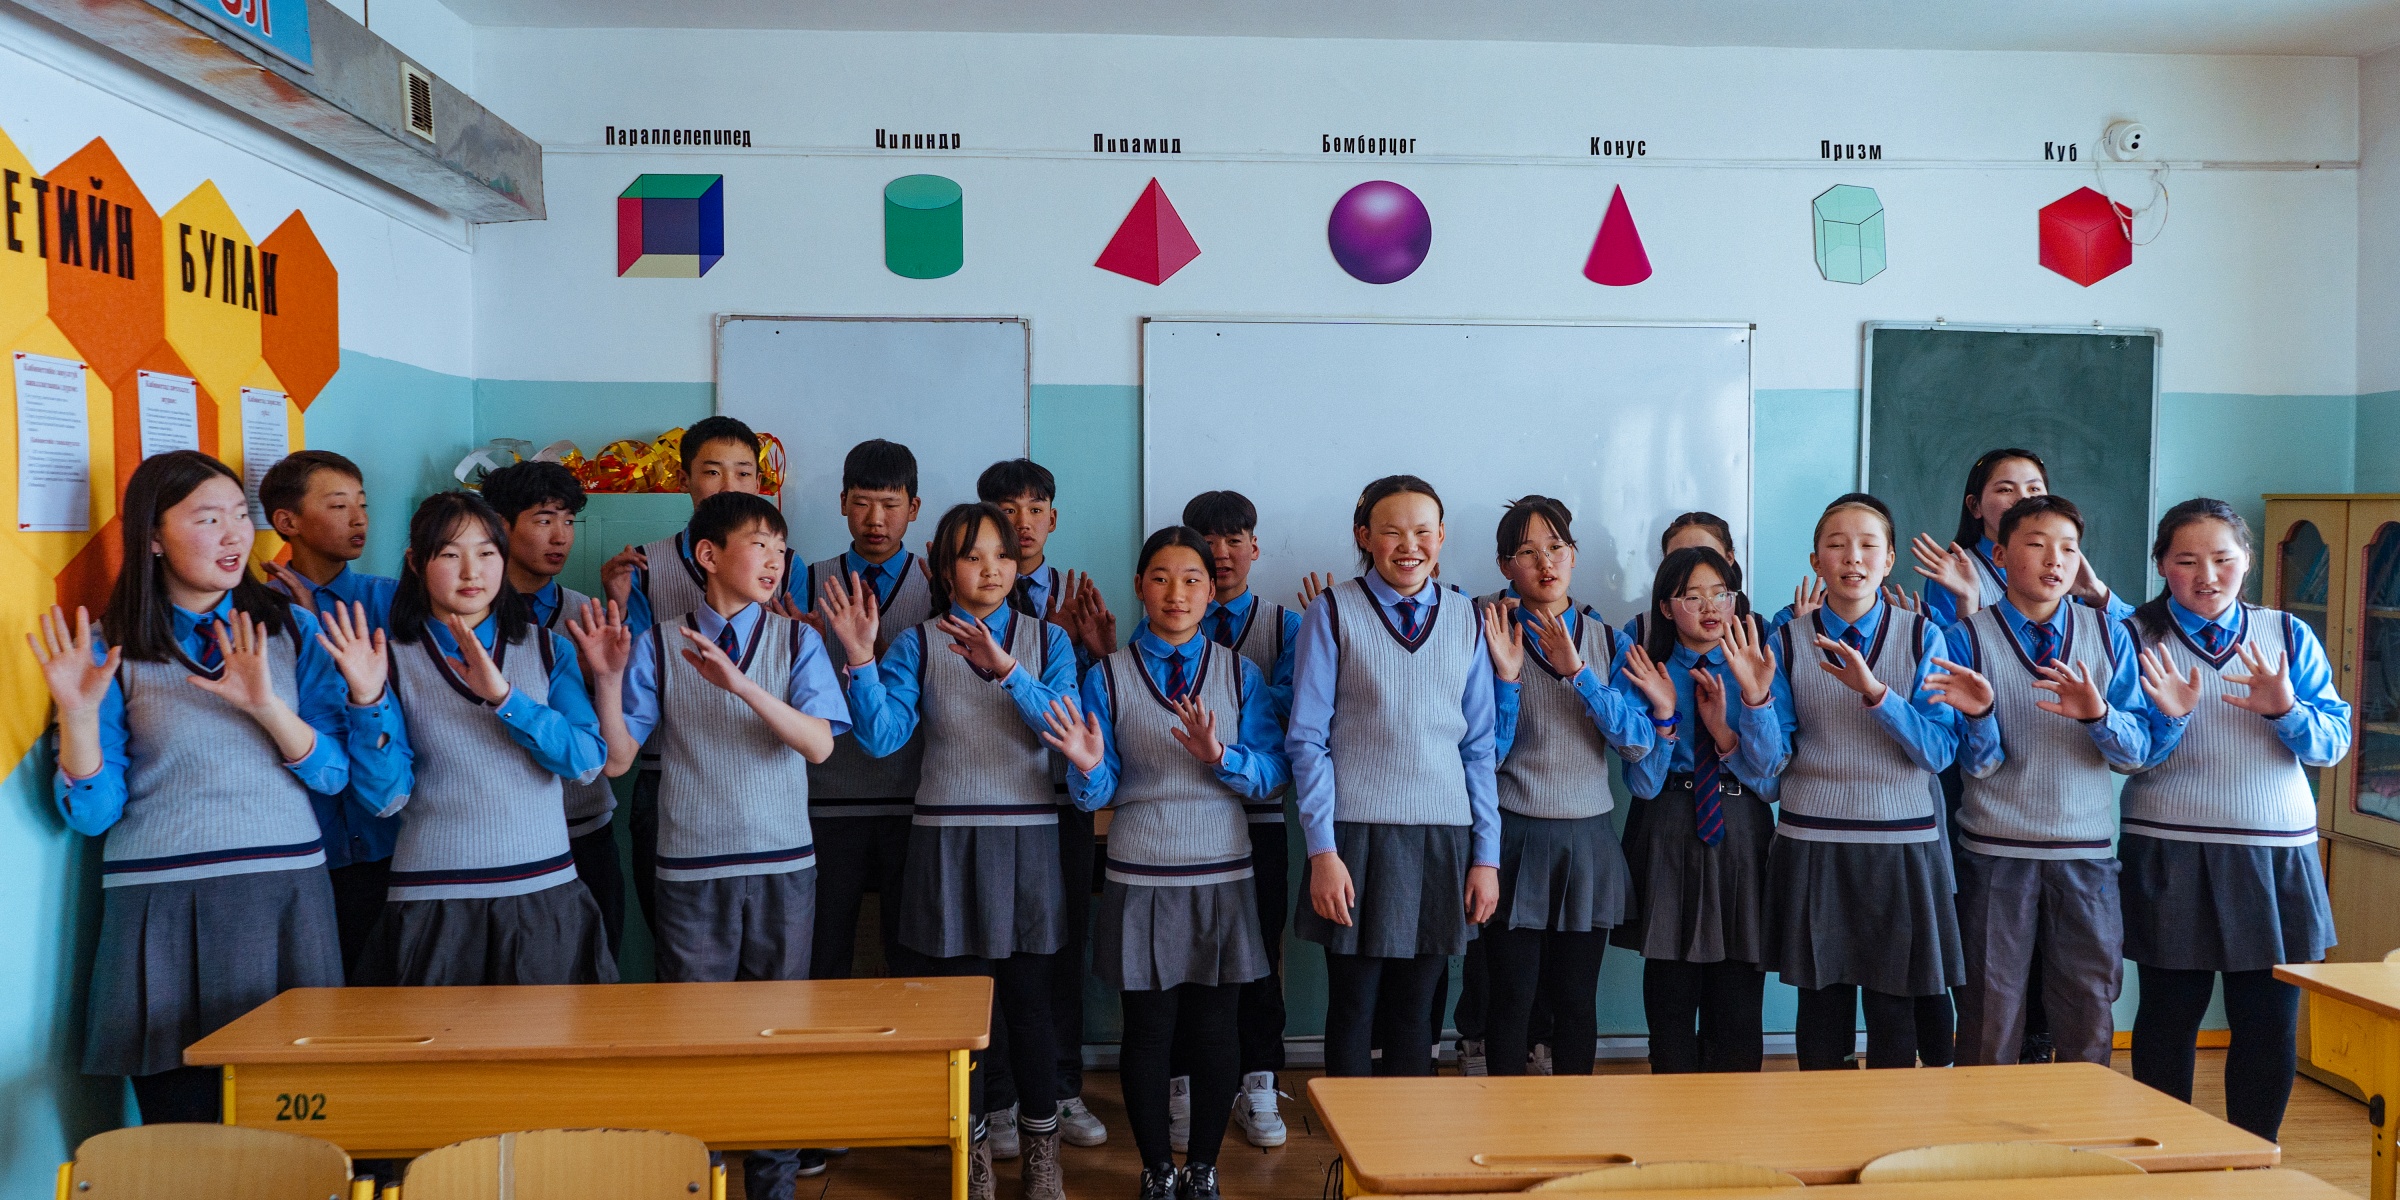 Oyunjargal’s classmates say their school’s name using sign language. Murun, Mongolia. Credit: GPE/Bat-Orgil Battulga